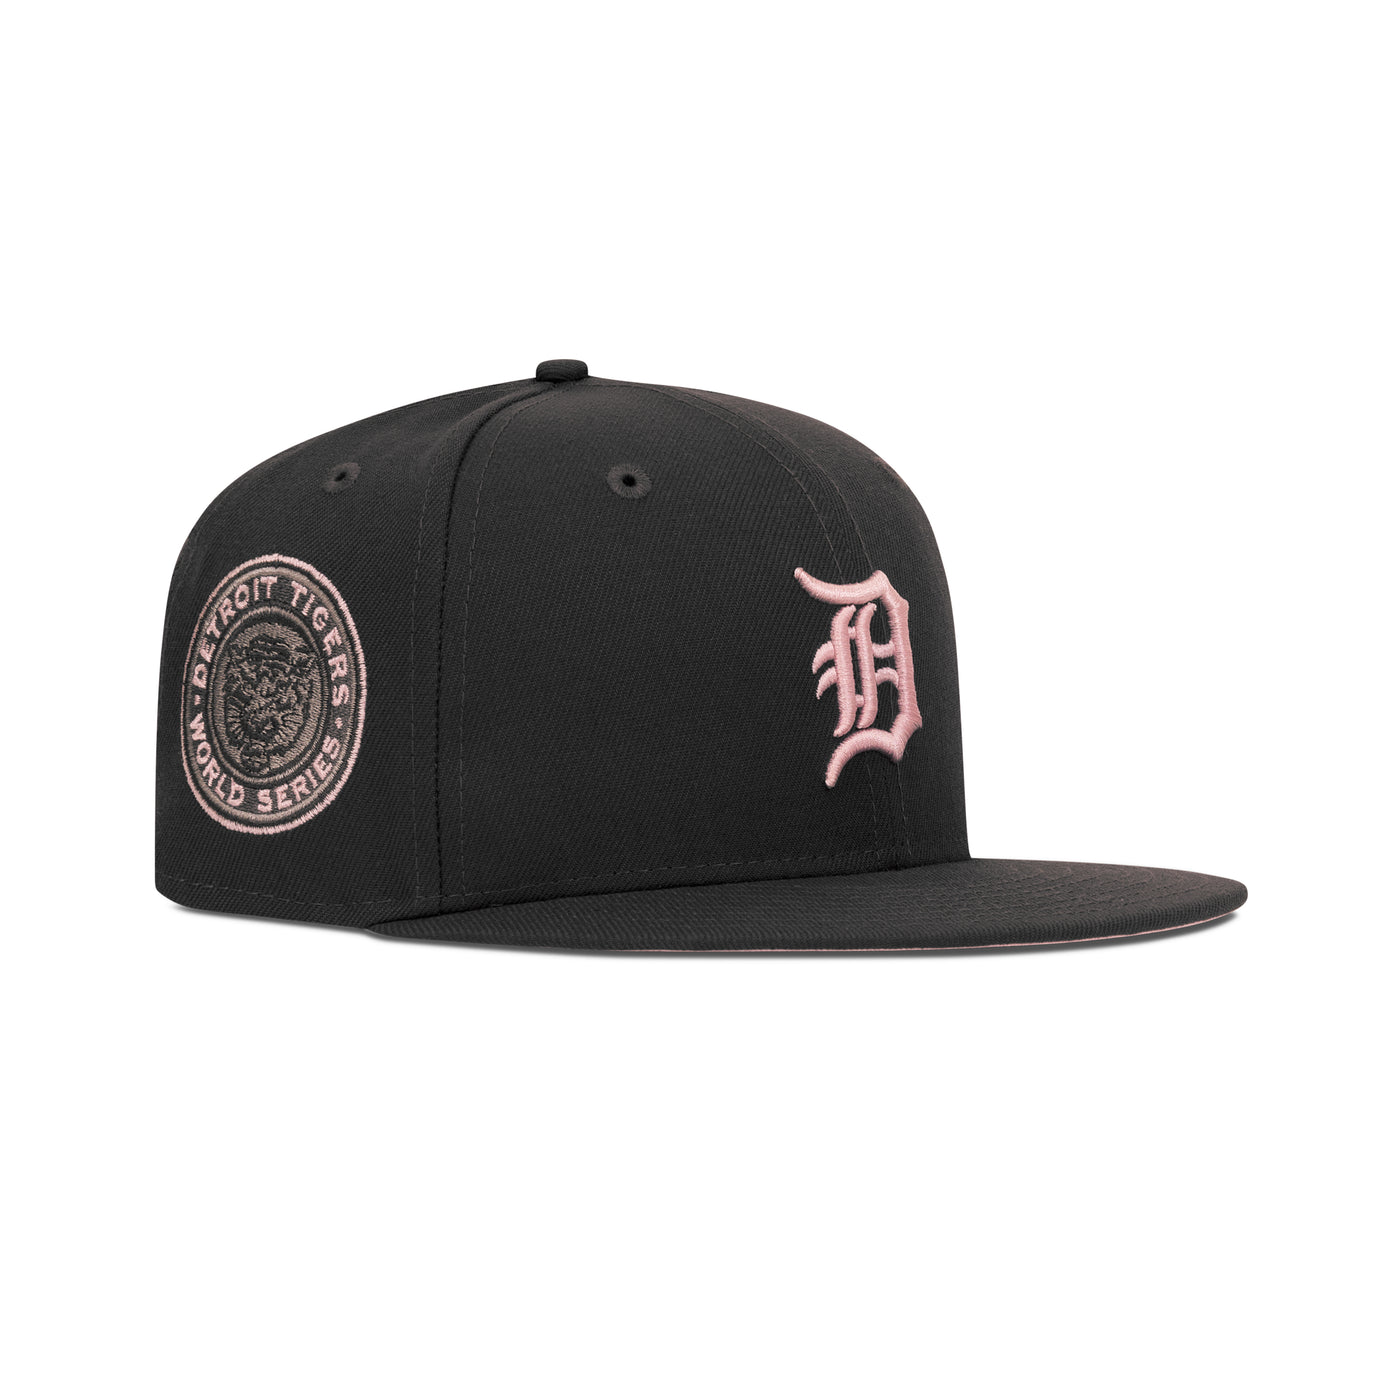 detroit tigers pink hat